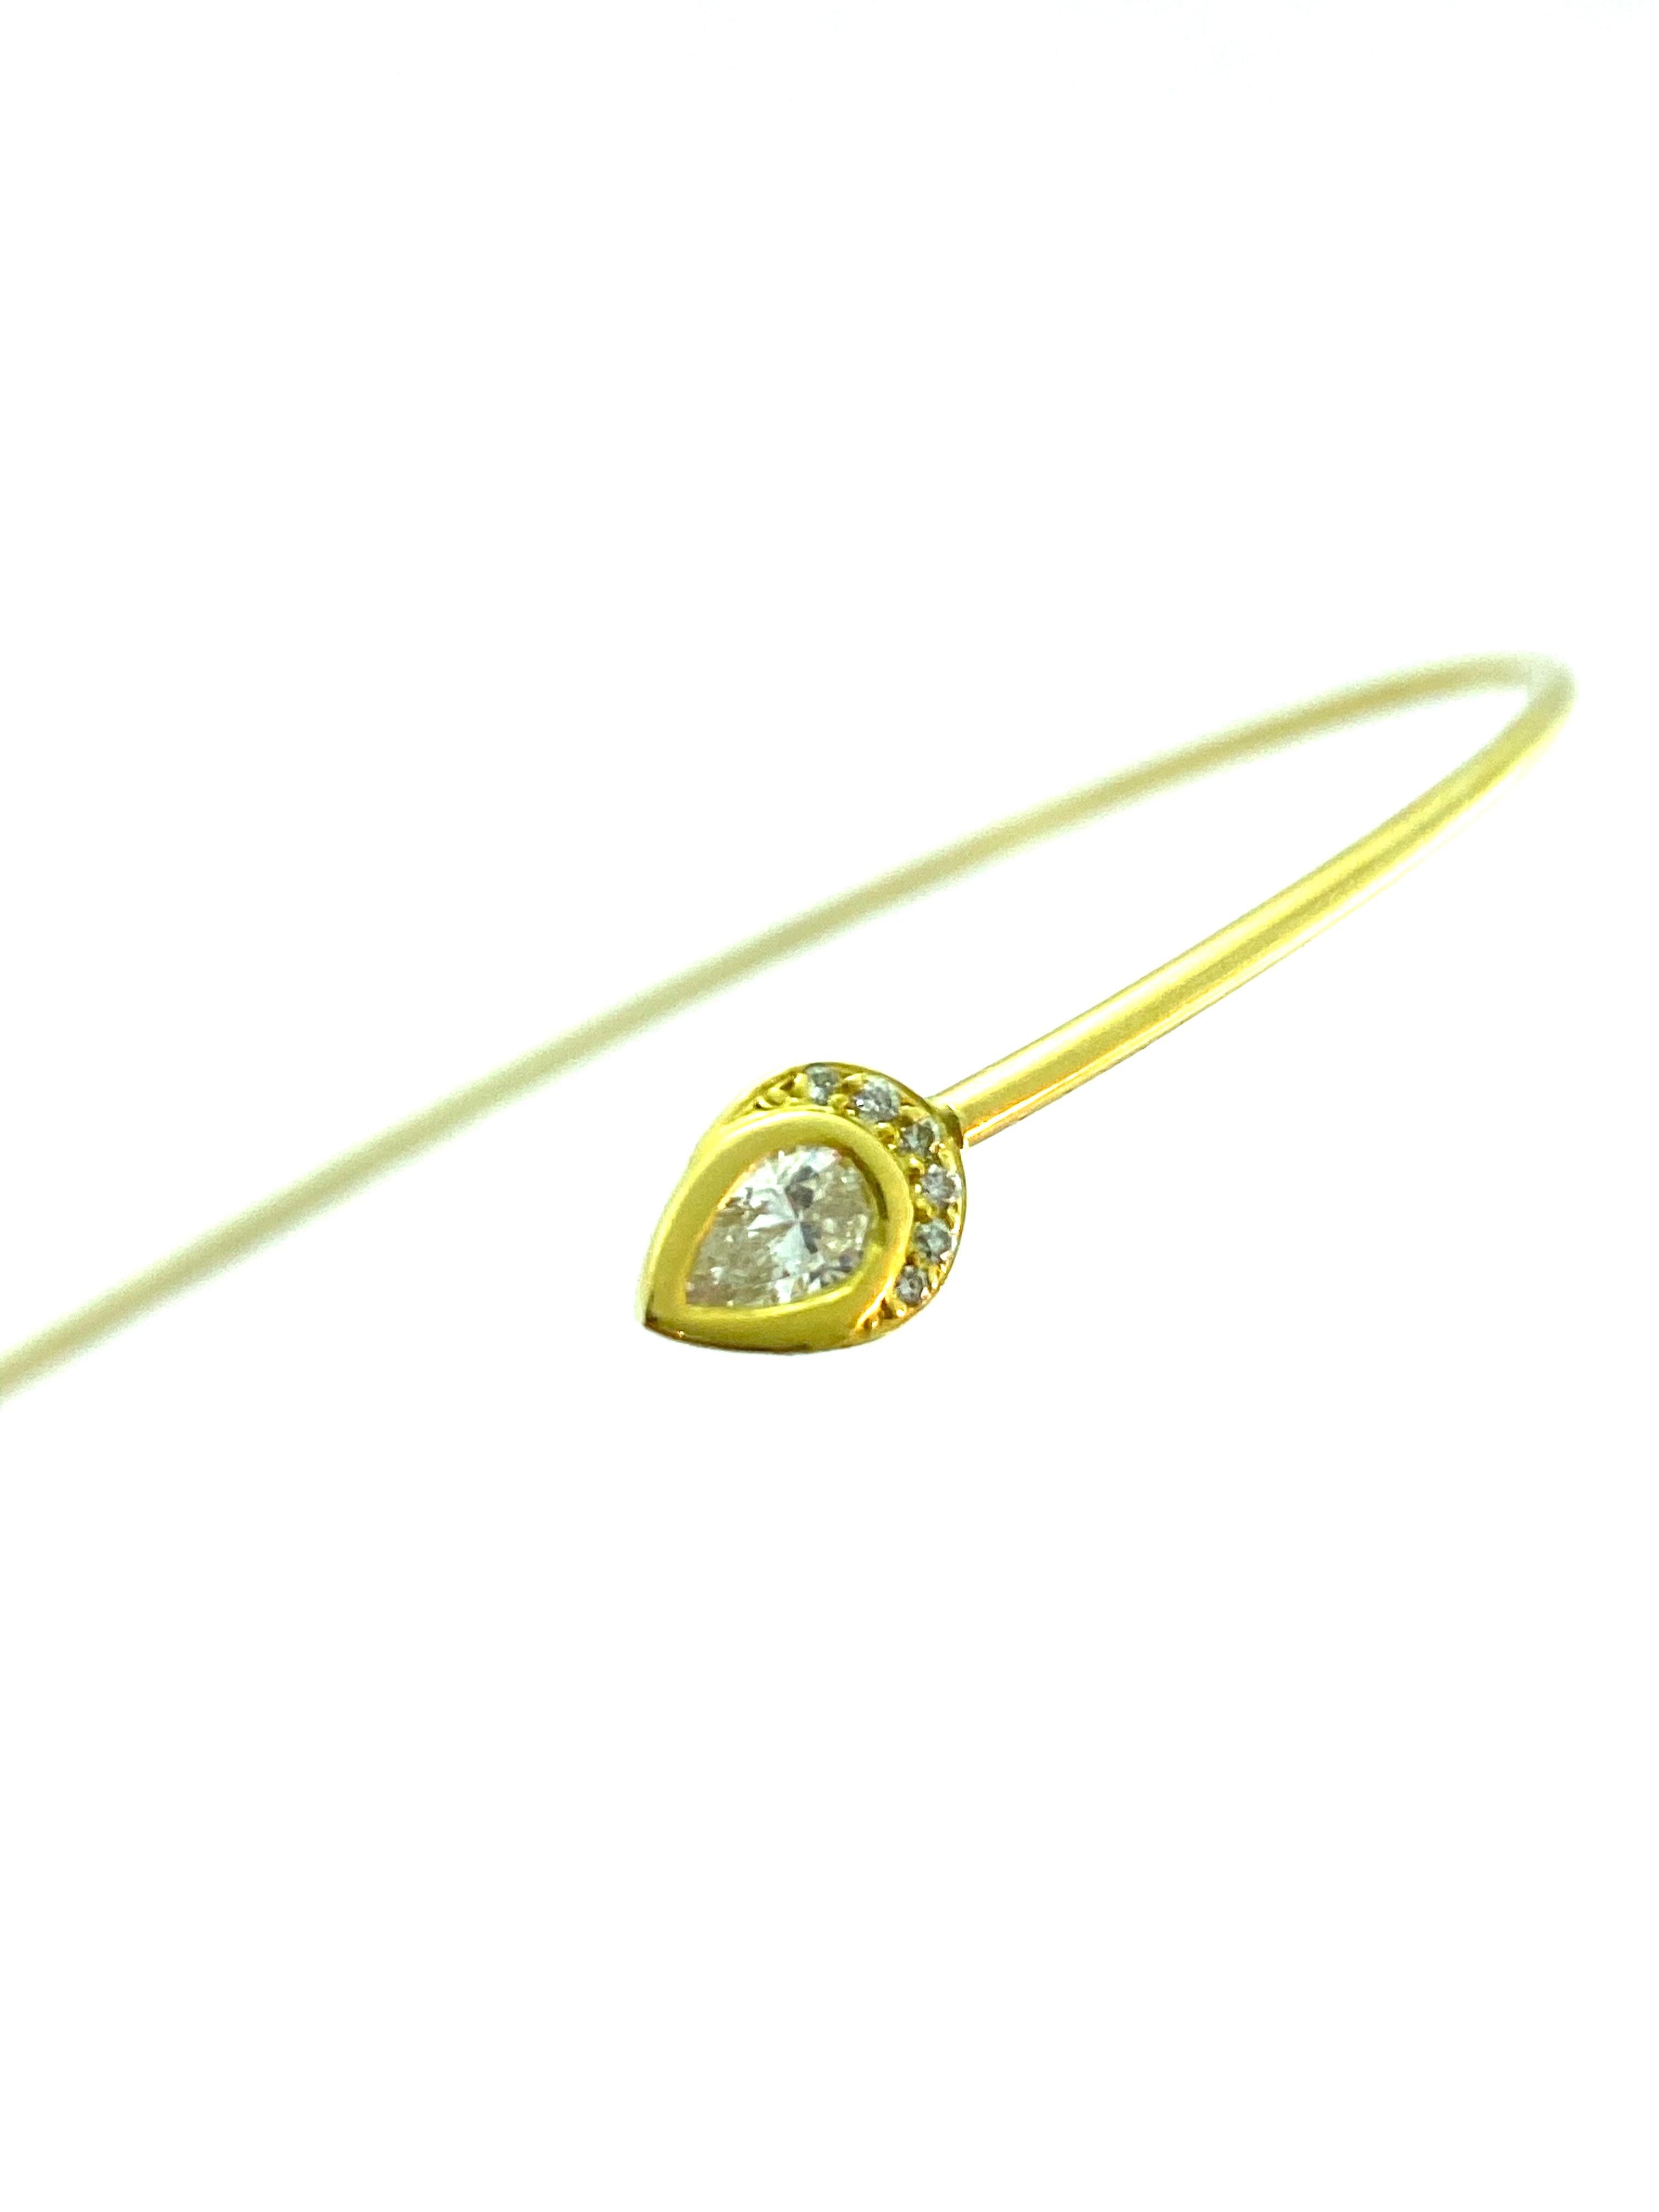 Women's Modern 18K Yellow Gold and Diamond Wire Choker Necklace